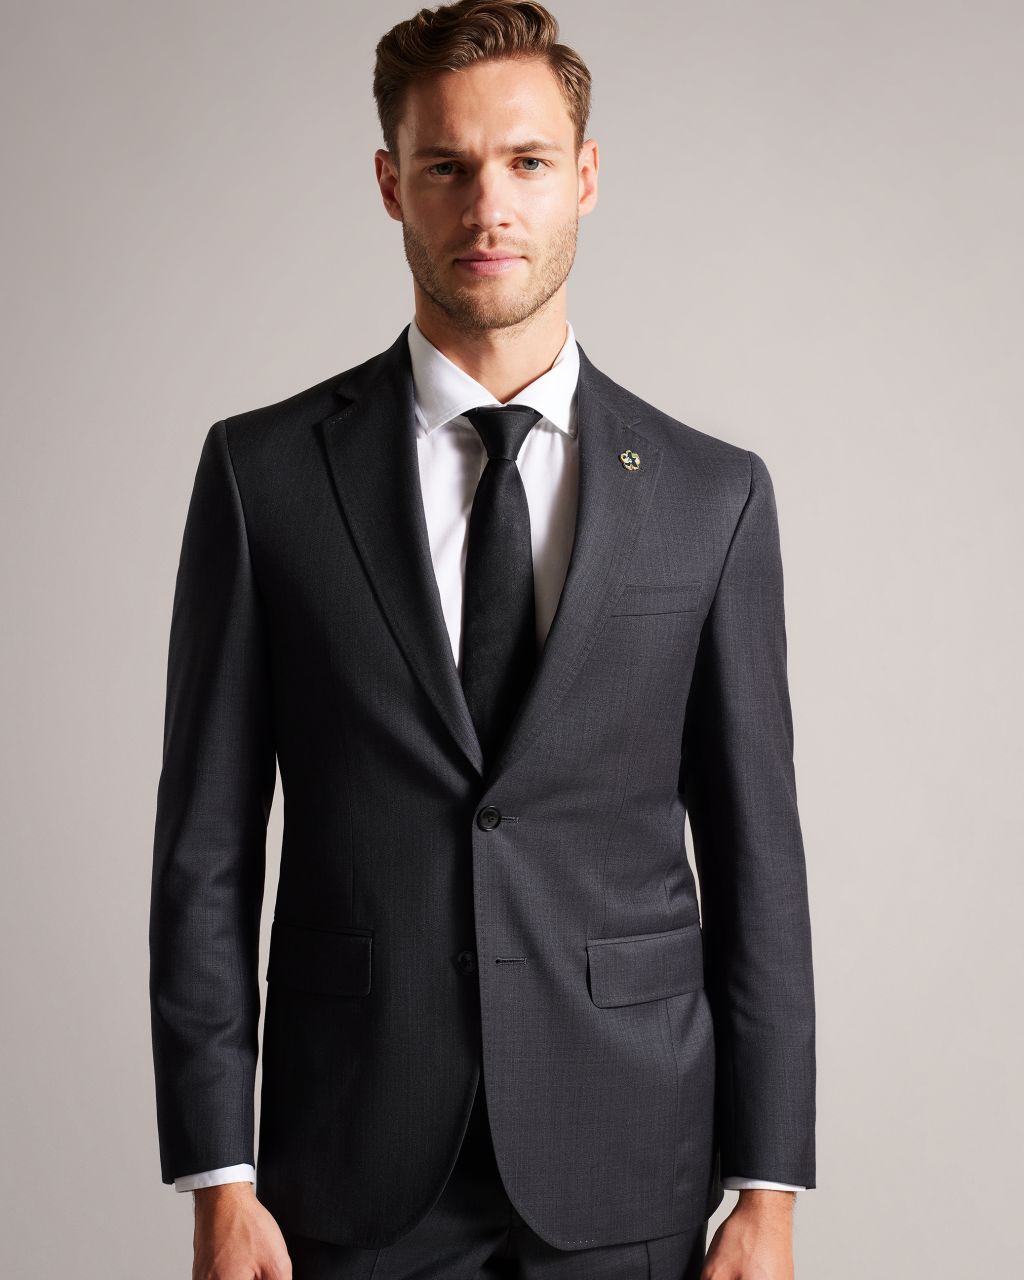 Ted Baker Men's Slim Fit Suit Jacket in Gray, JVJacketbl, Wool